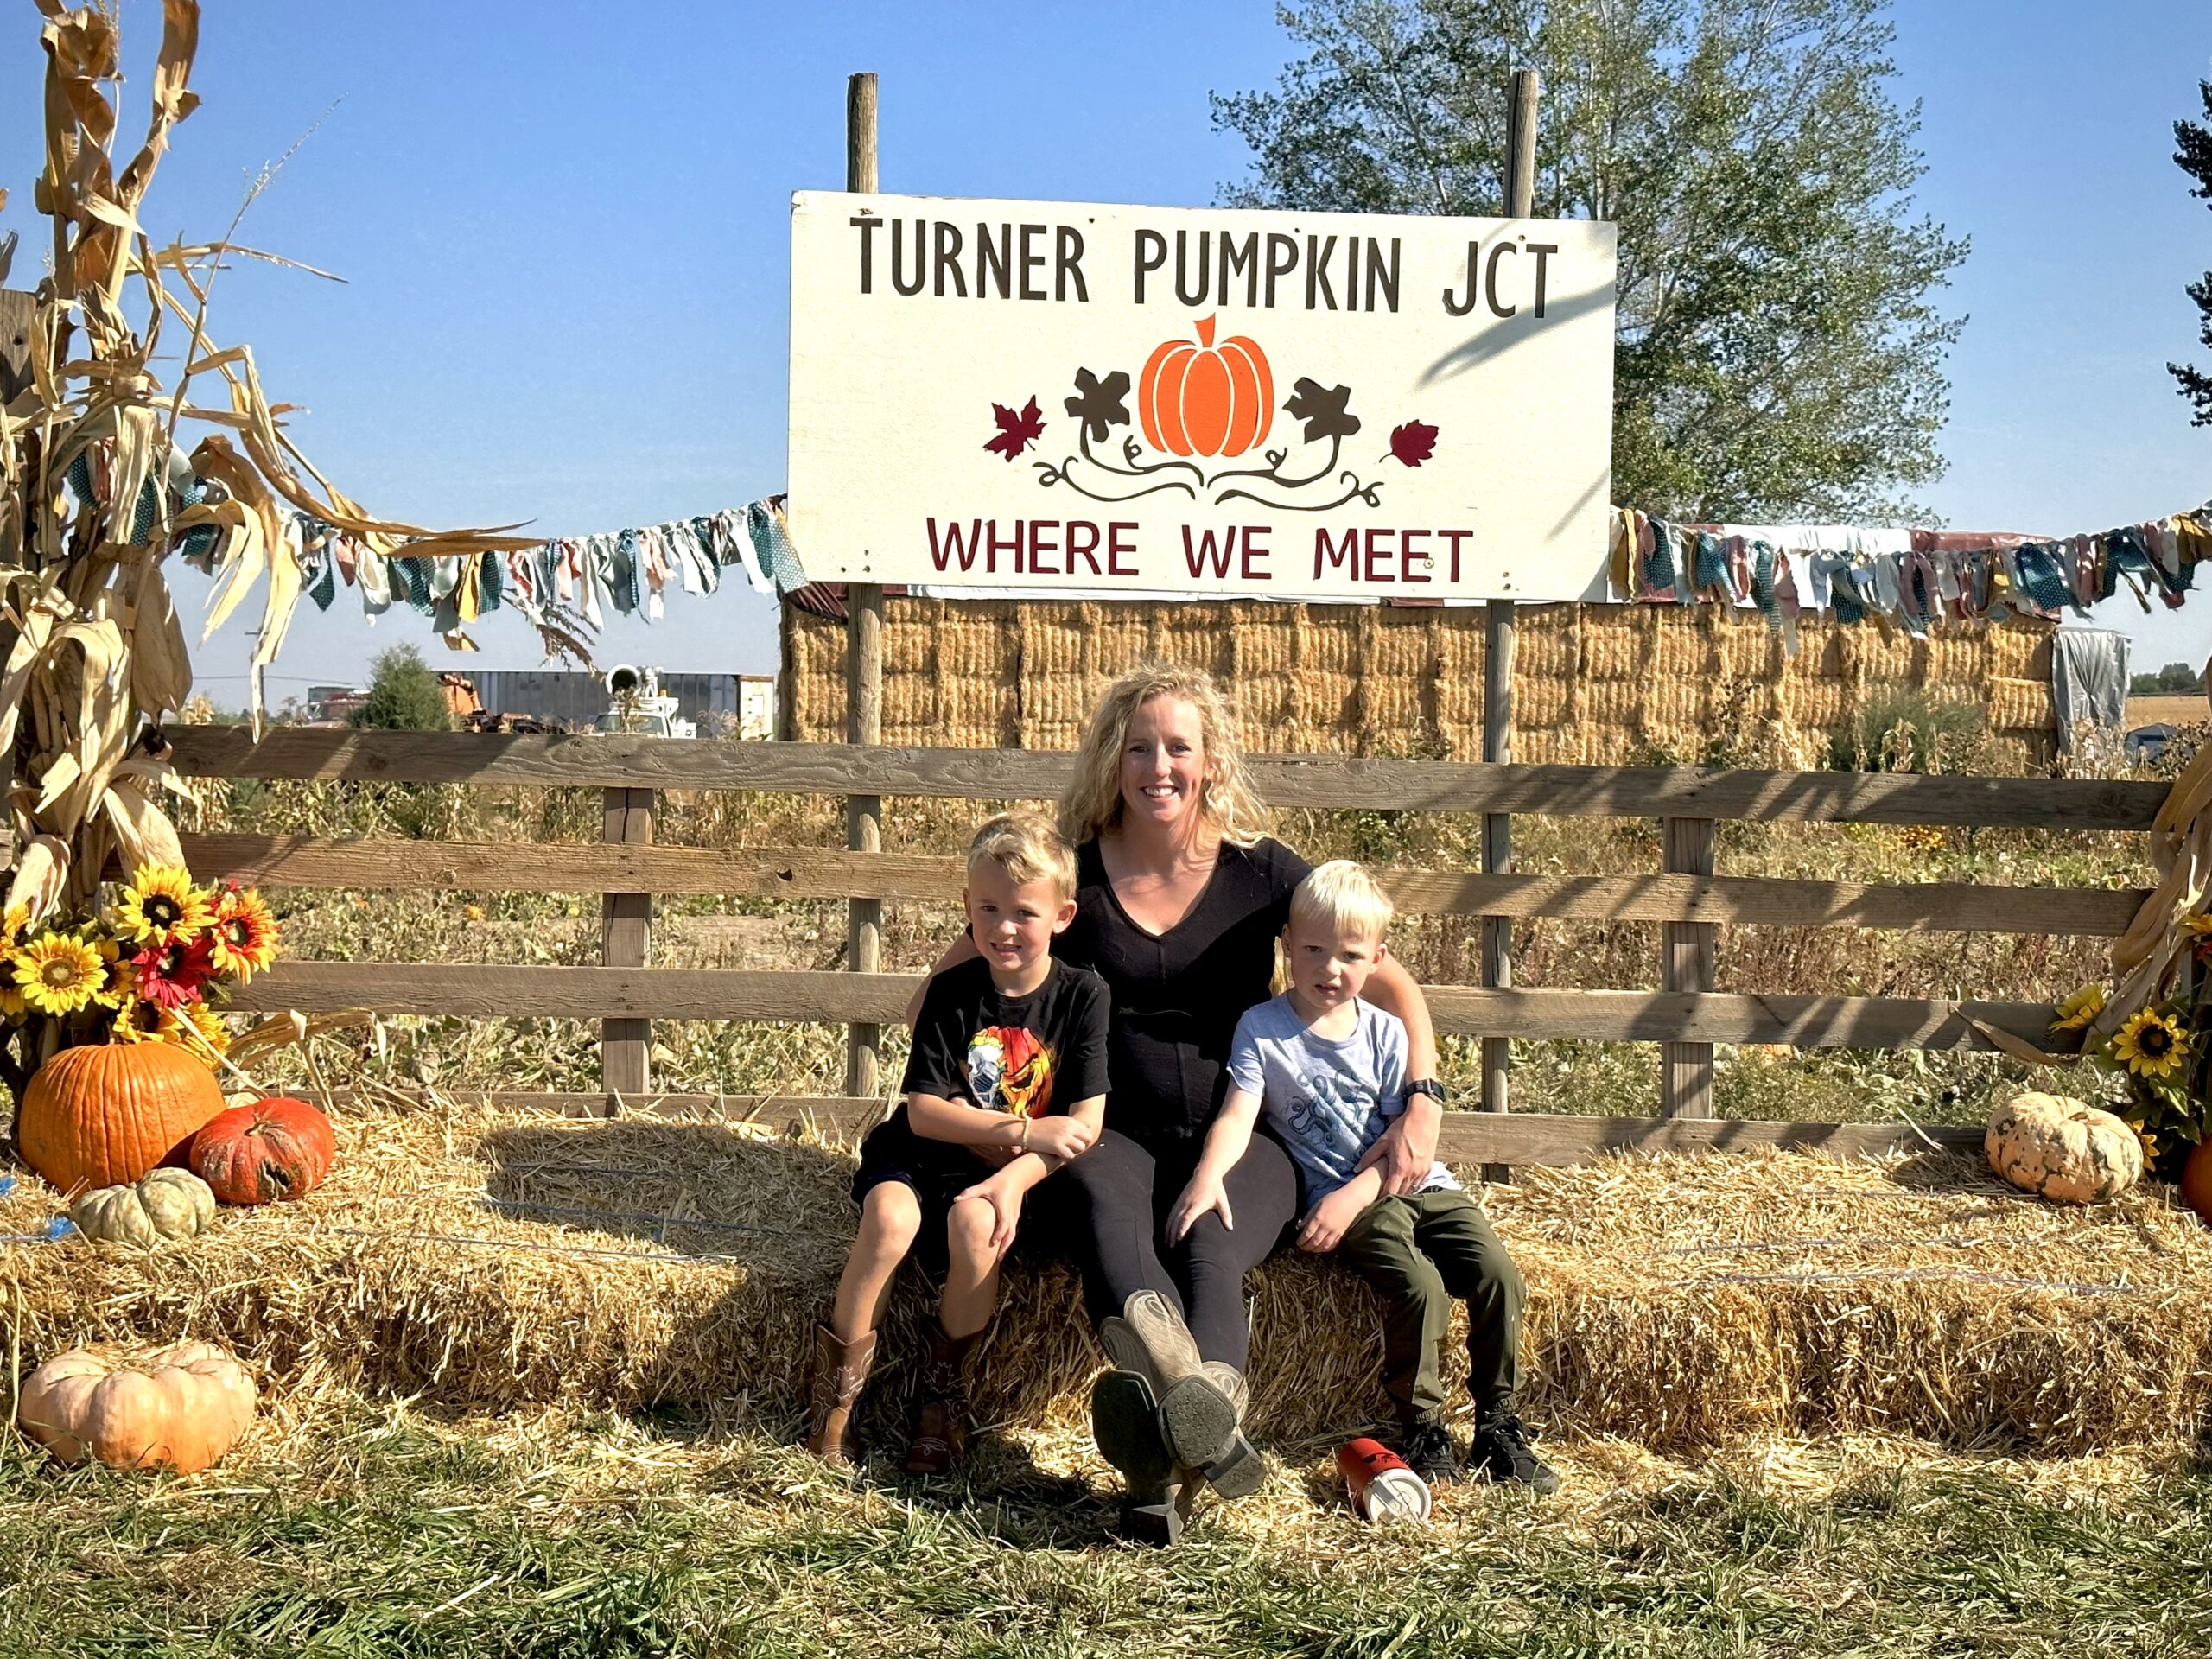 Turner pumpkin junction -125